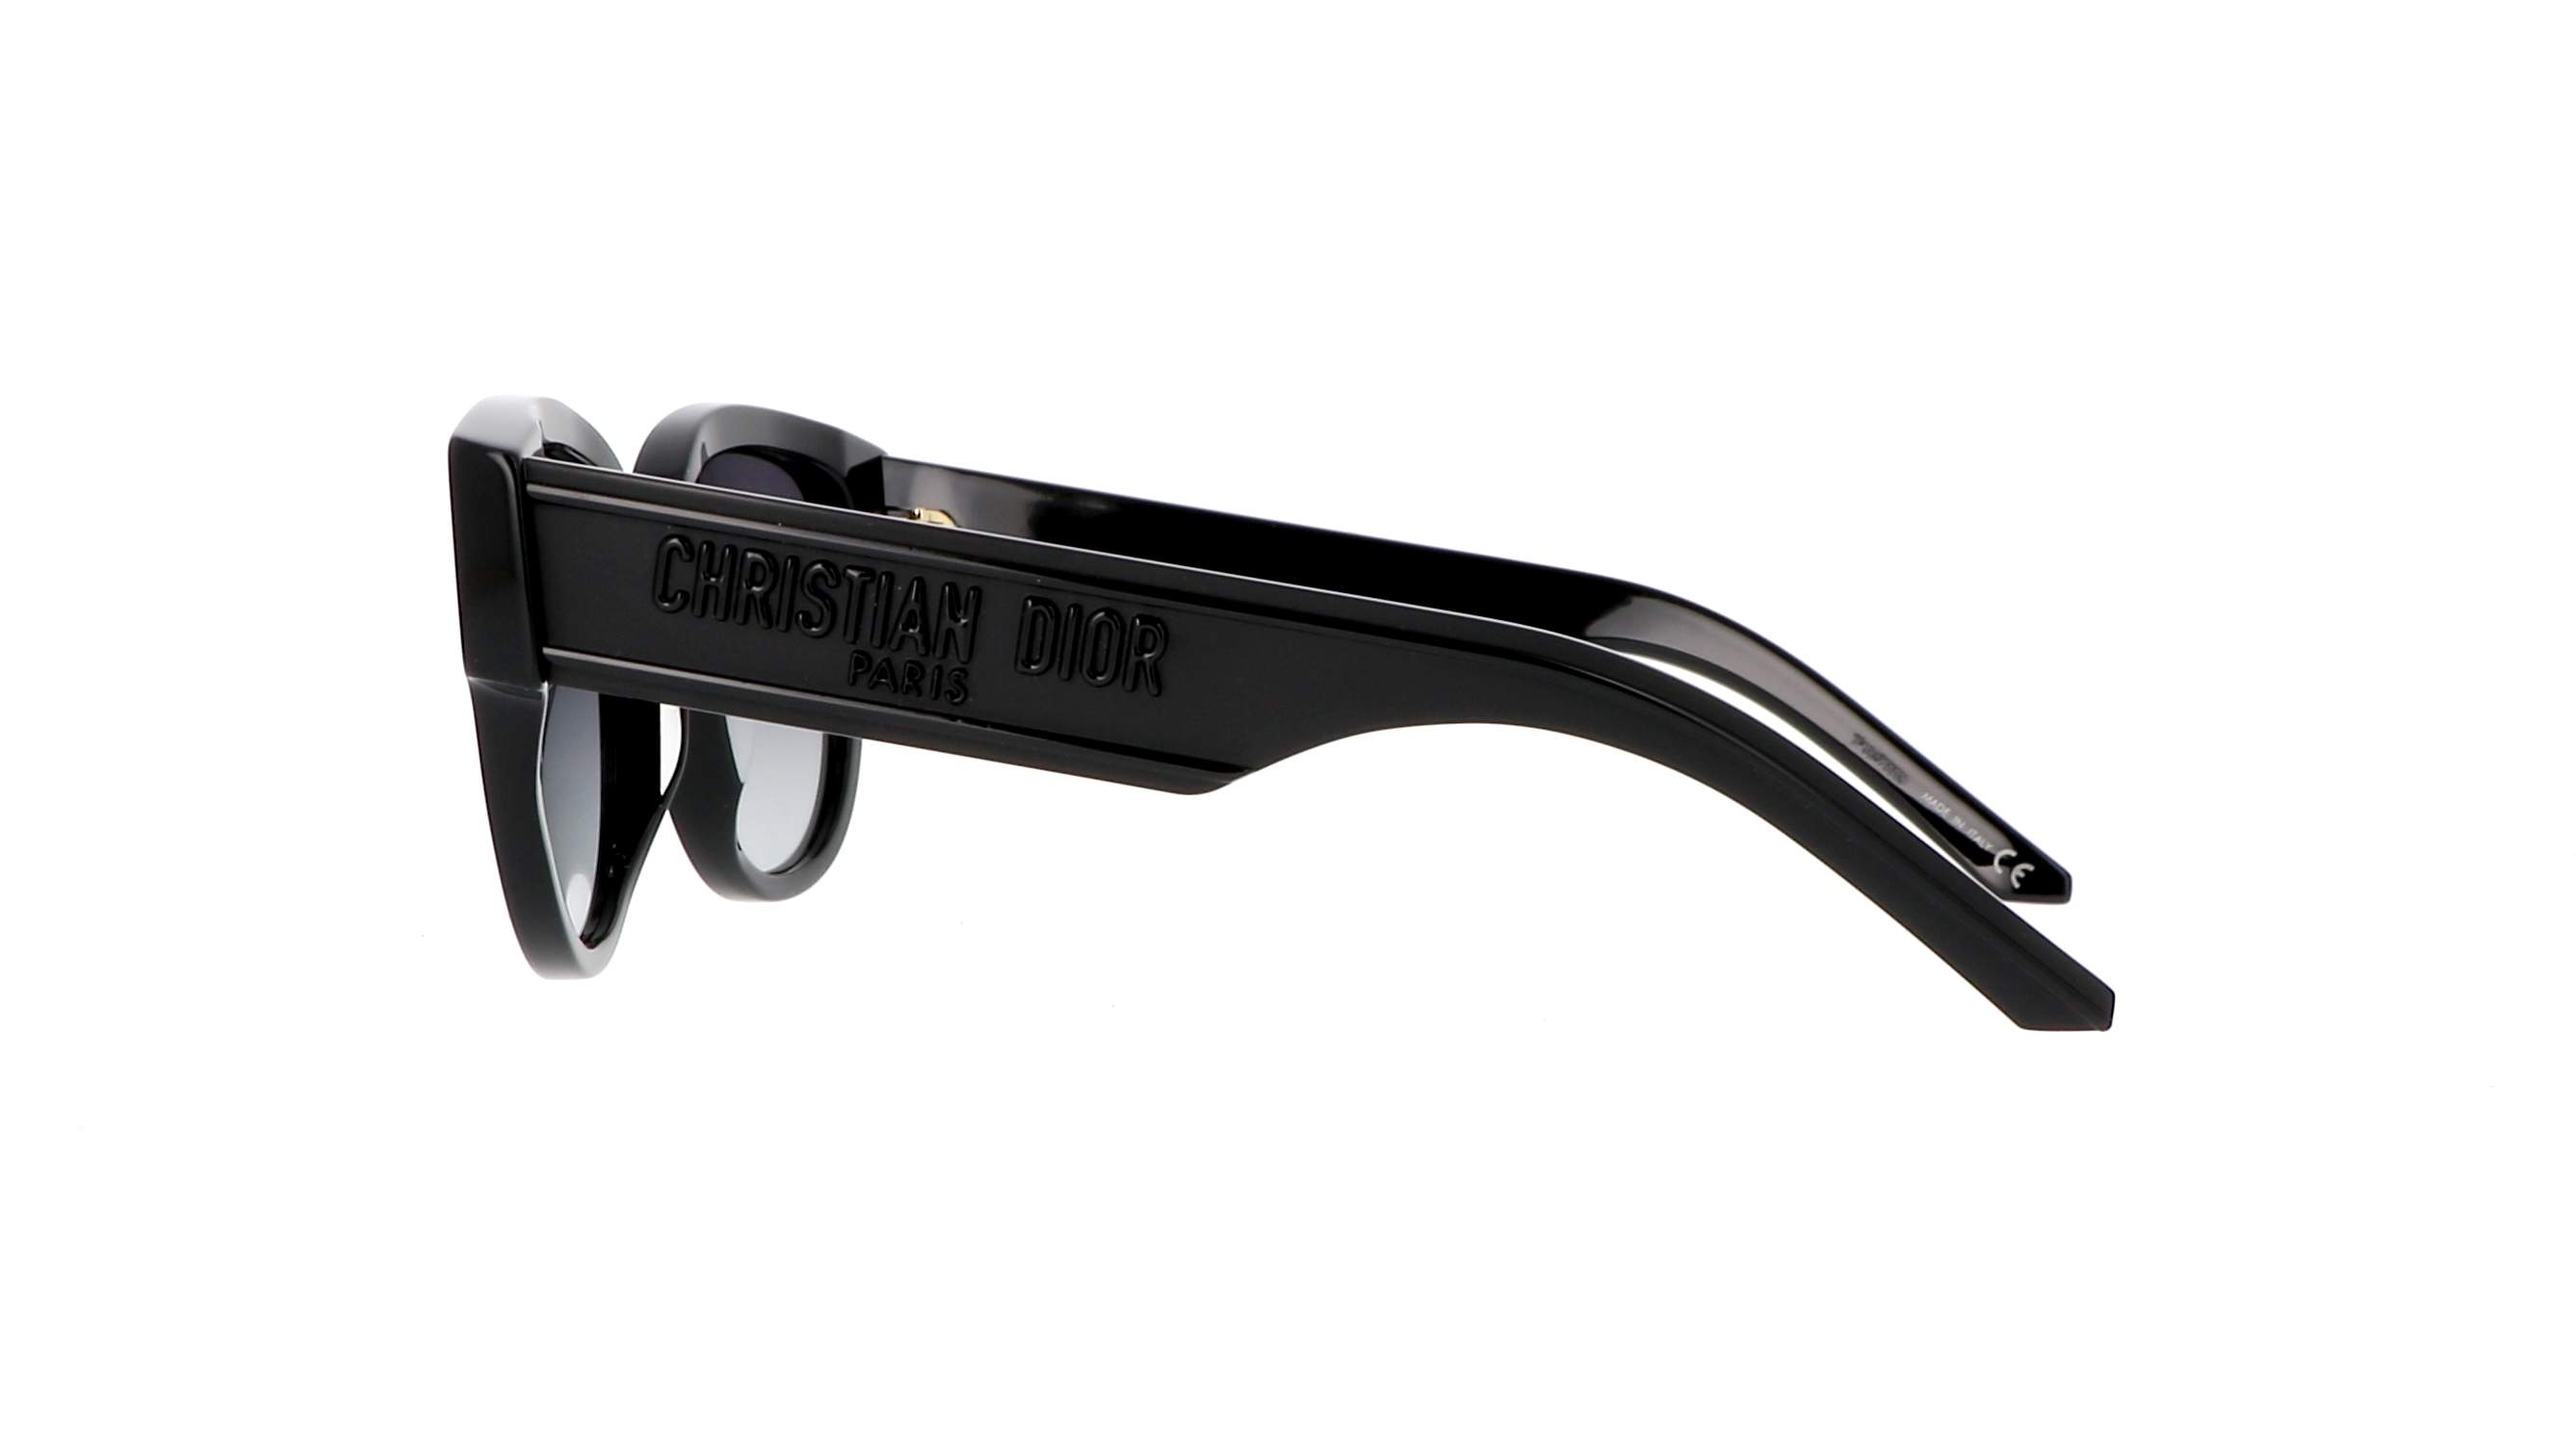 Wildior S 3 U Square Sunglasses in Black  Dior Eyewear  Mytheresa